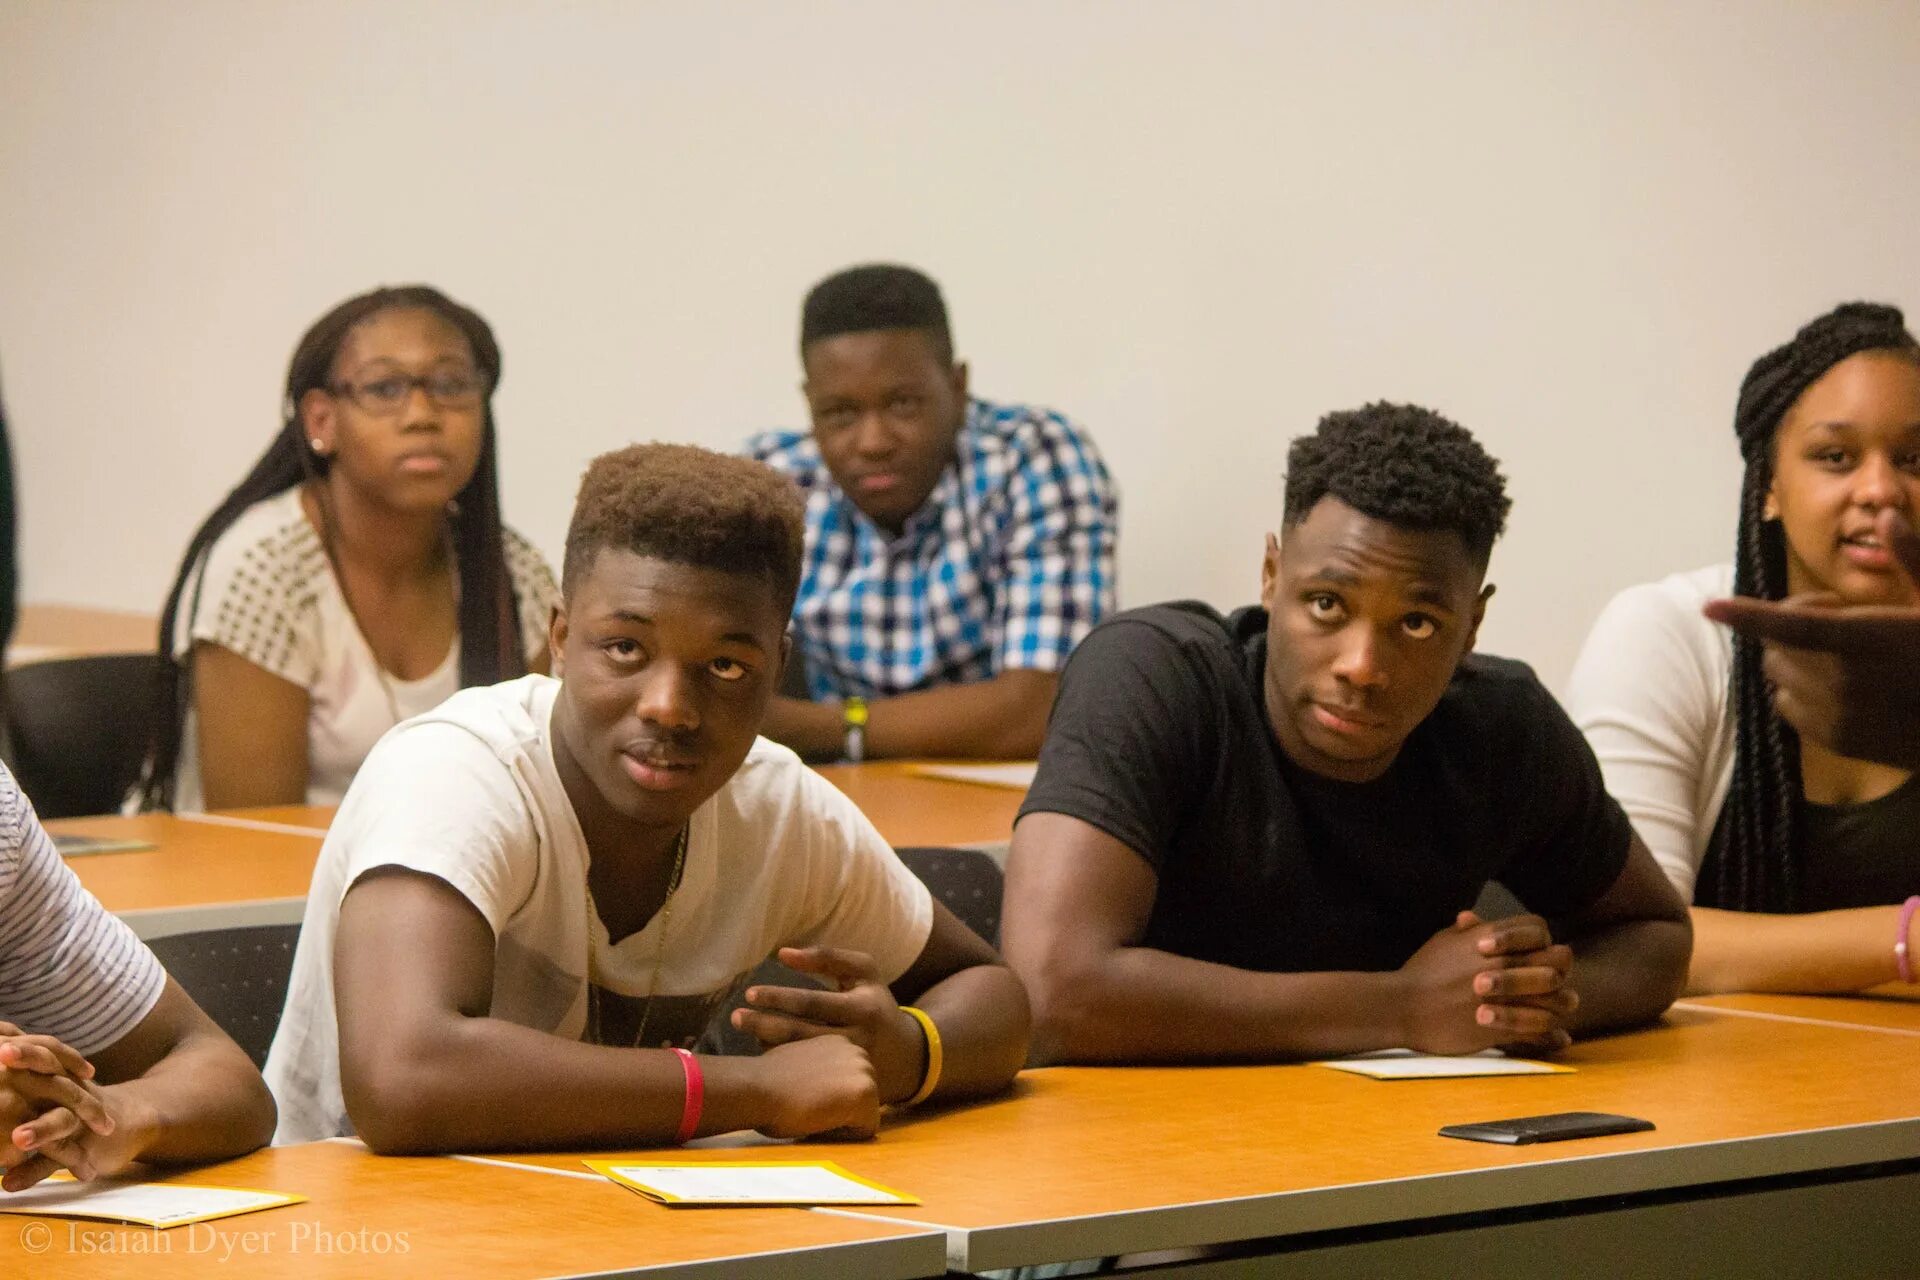 The students are watching. Африкан Американ. Африканские студенты. Афроамериканцы в школе США. Чернокожий студент.